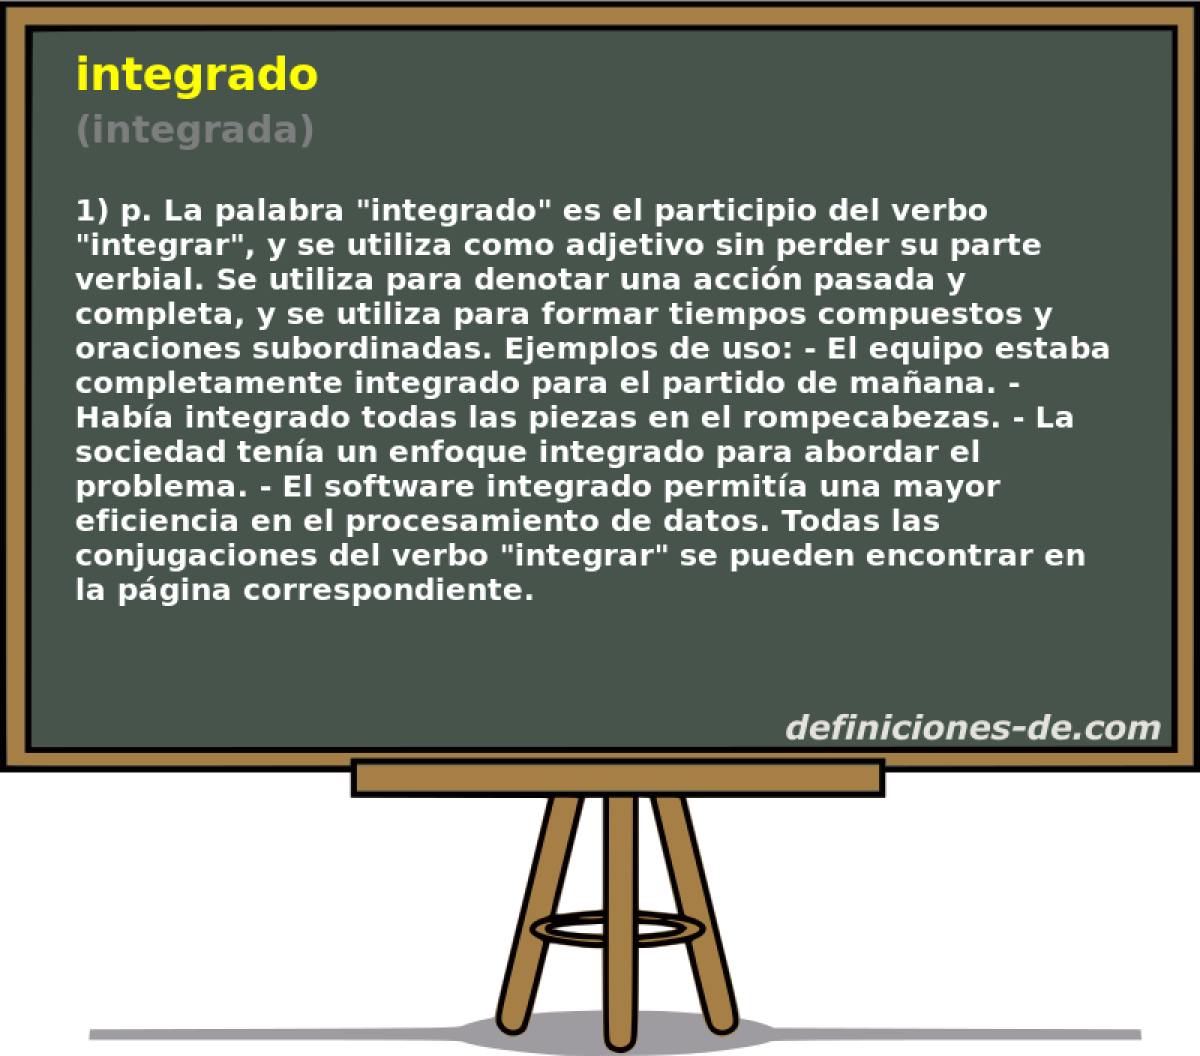 integrado (integrada)